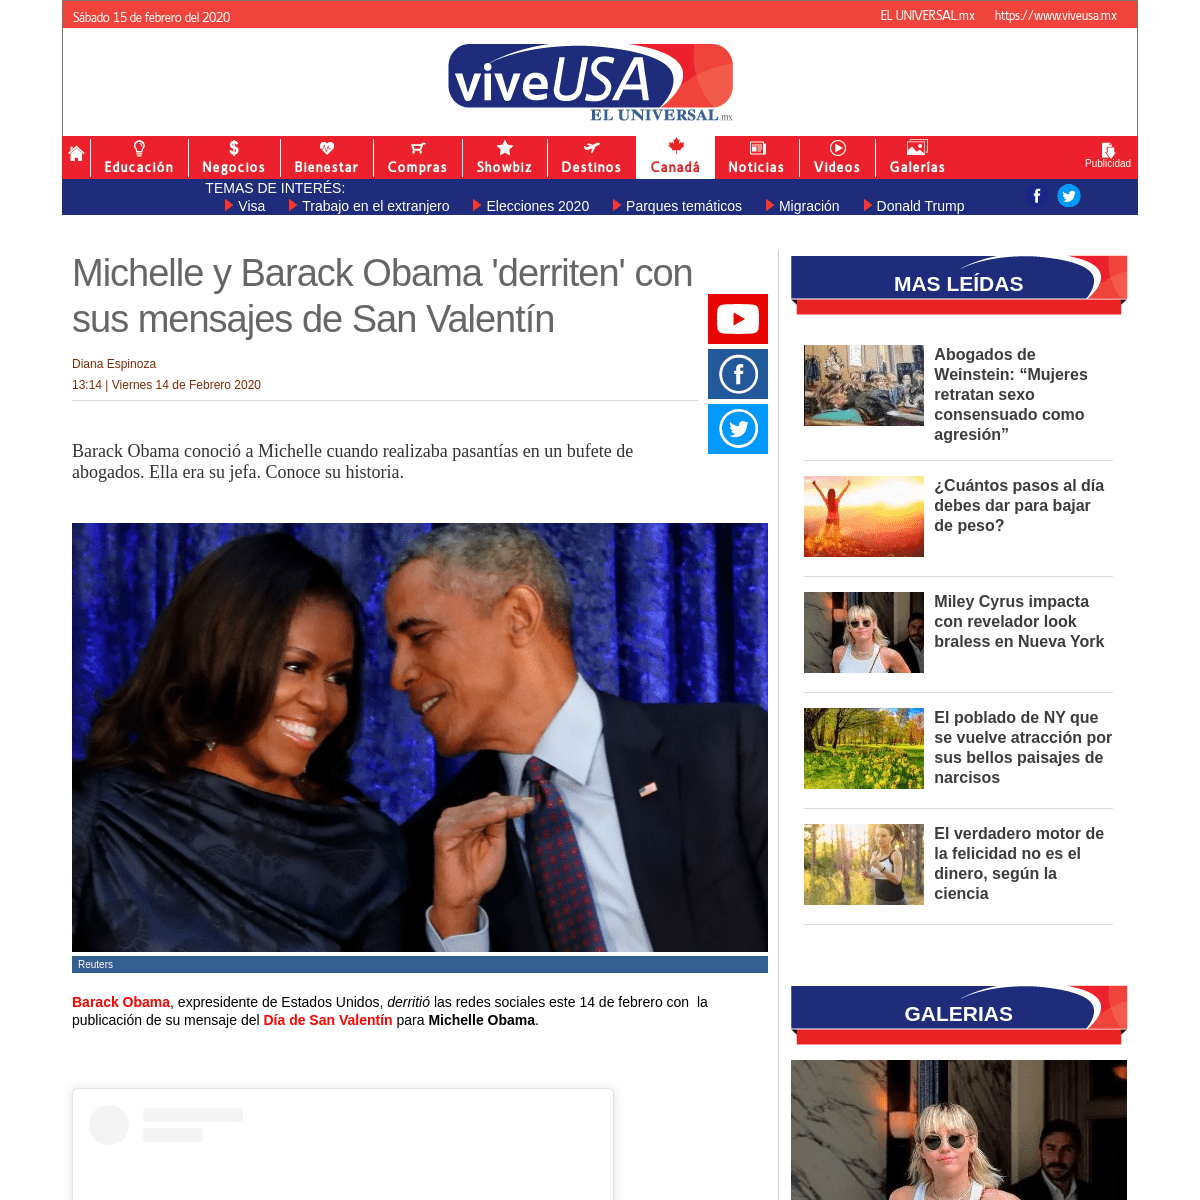 A complete backup of www.viveusa.mx/noticias/michelle-y-barack-obama-derriten-con-sus-mensajes-de-san-valentin